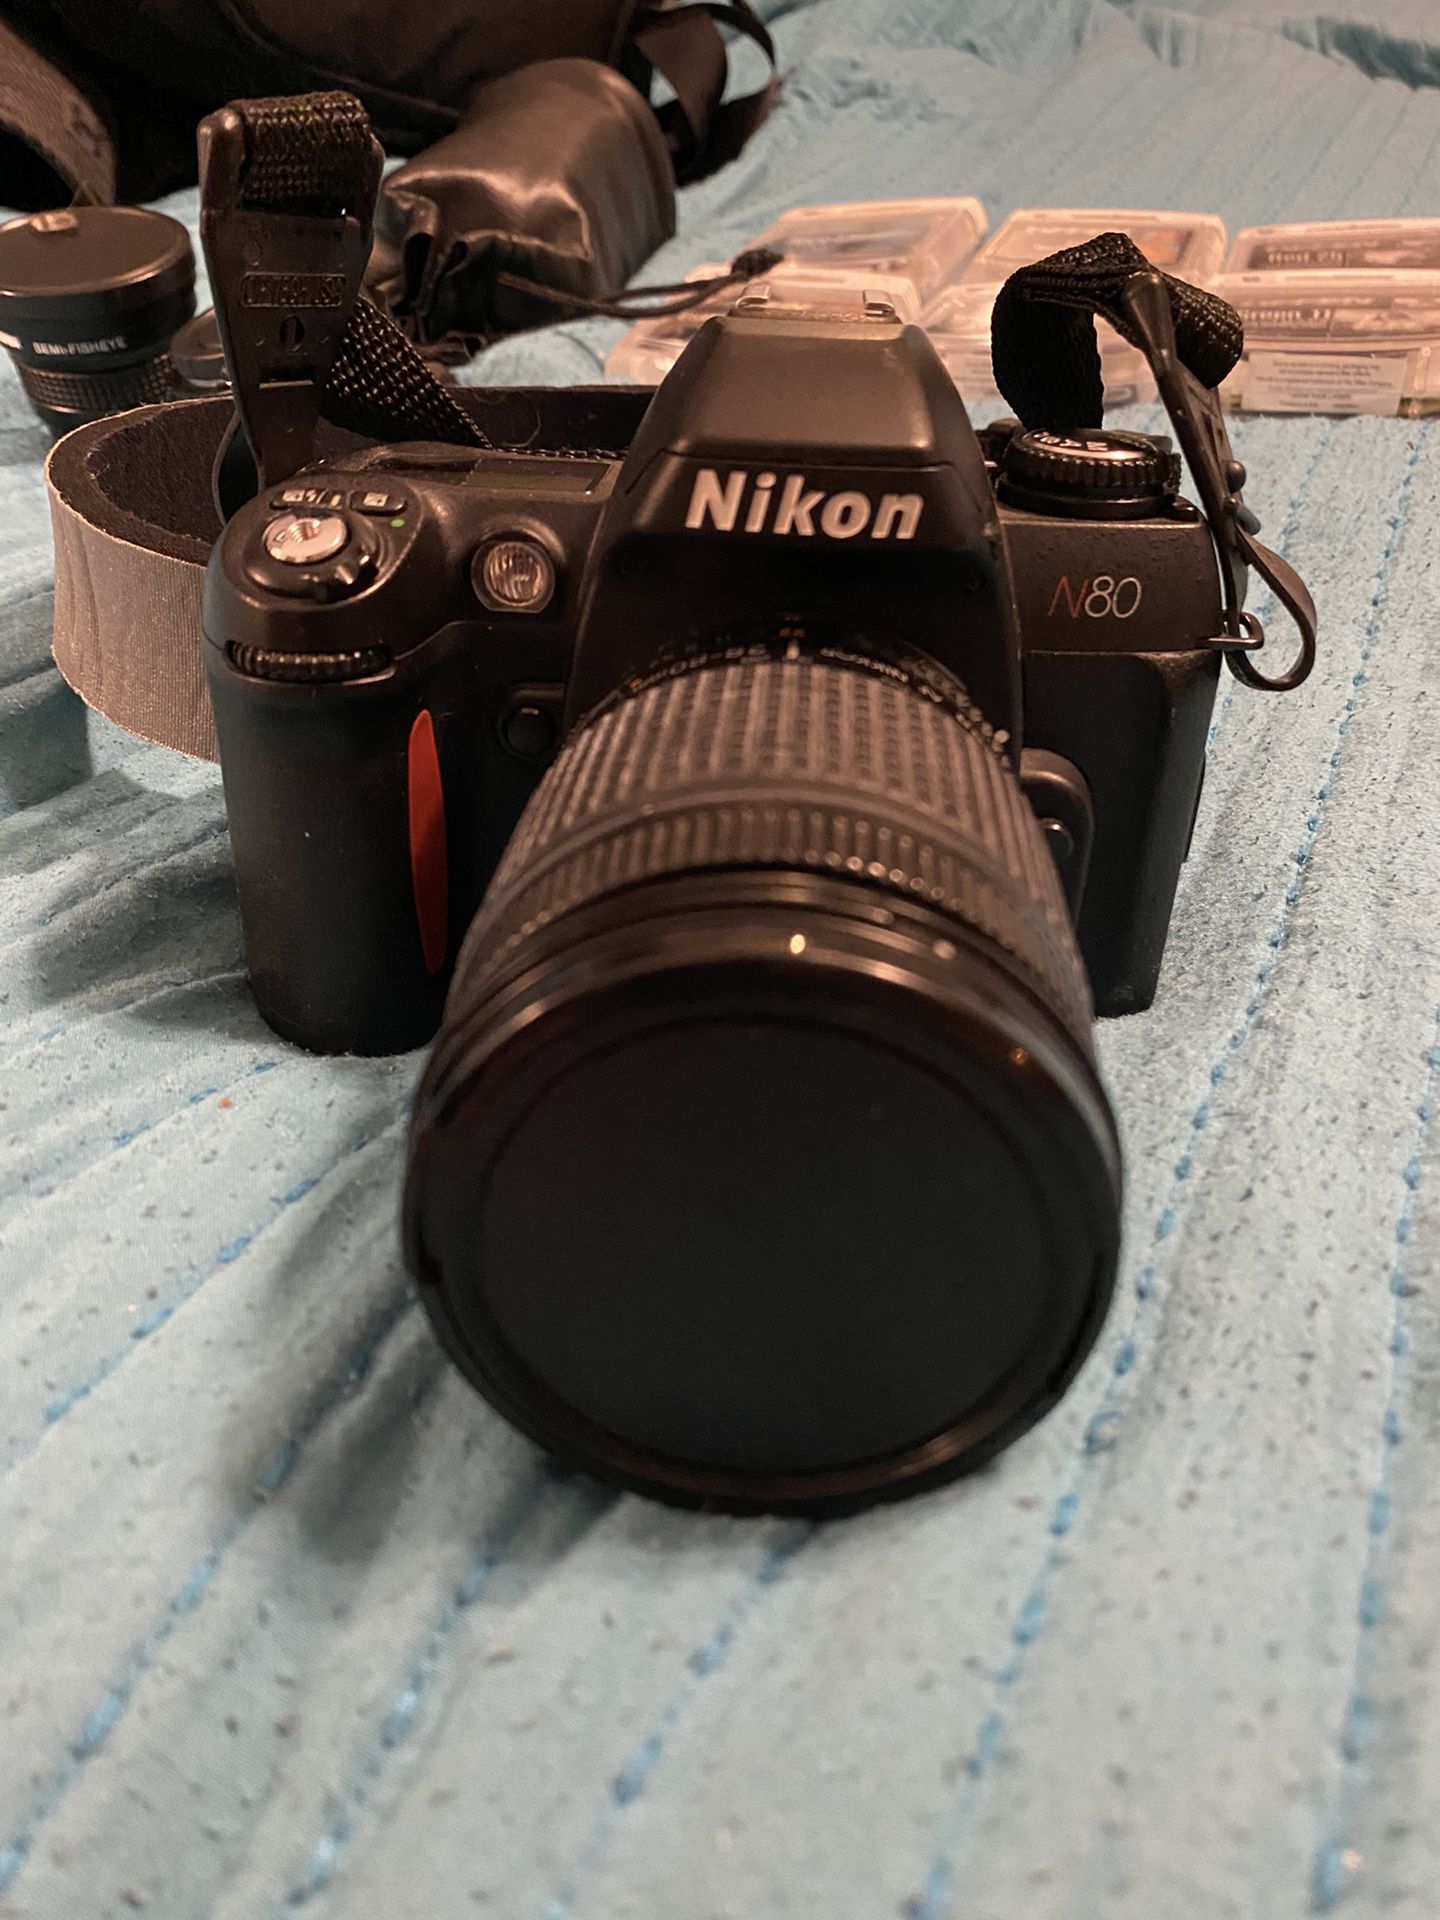 Nikon N80 film camera